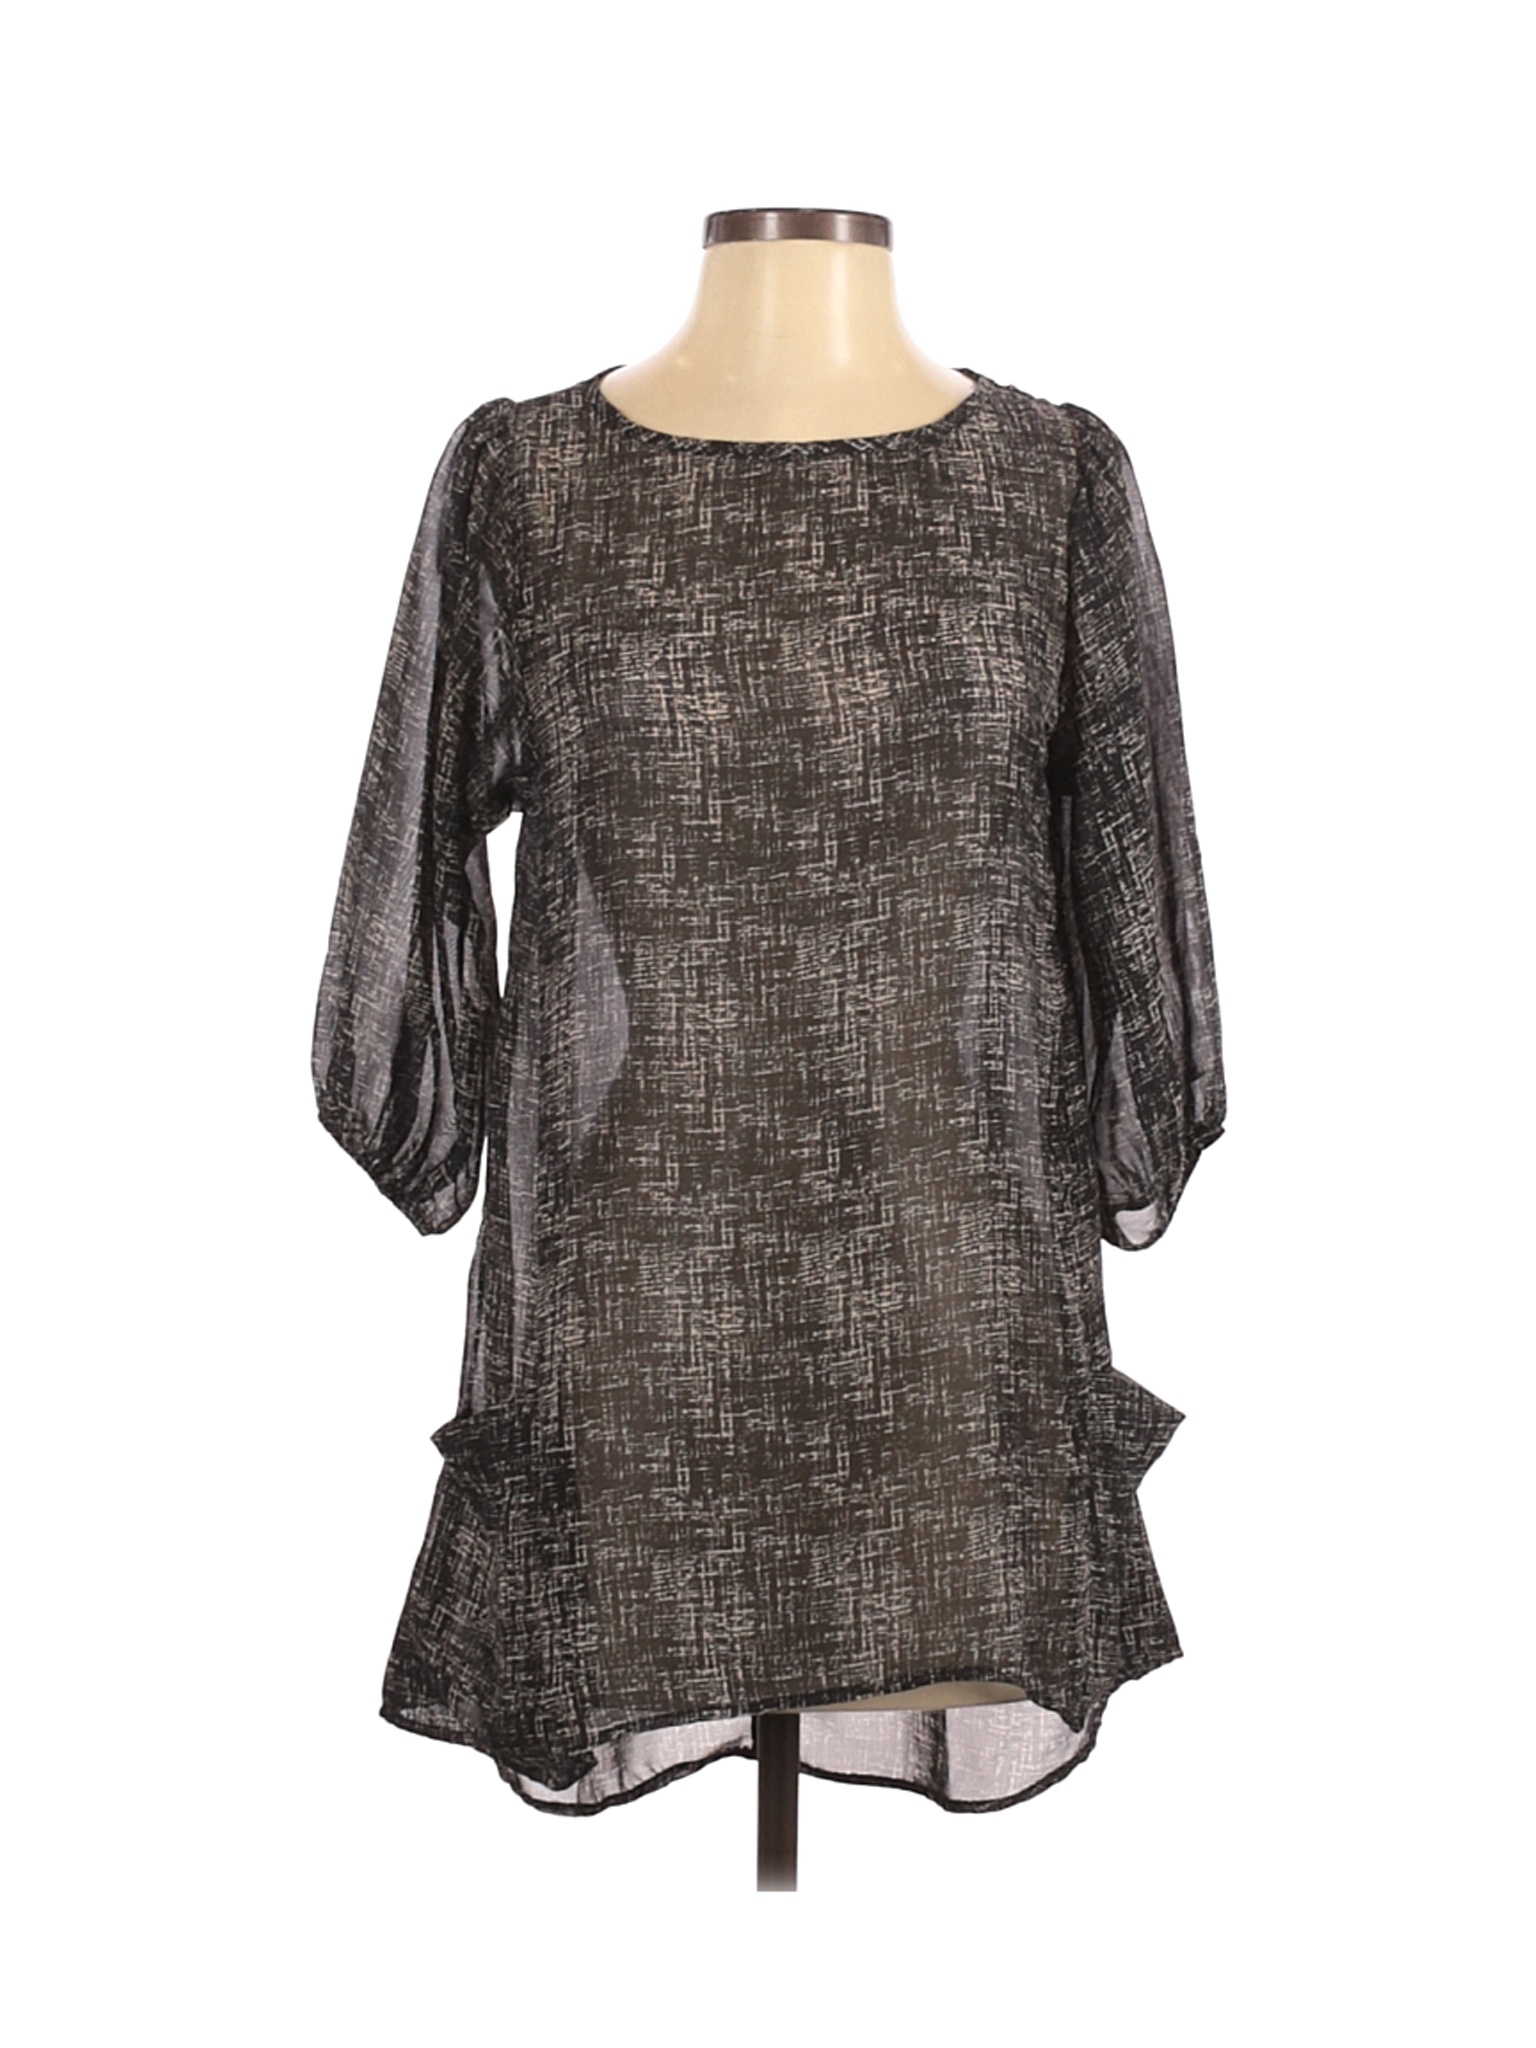 Lily White Women Black Casual Dress S | eBay